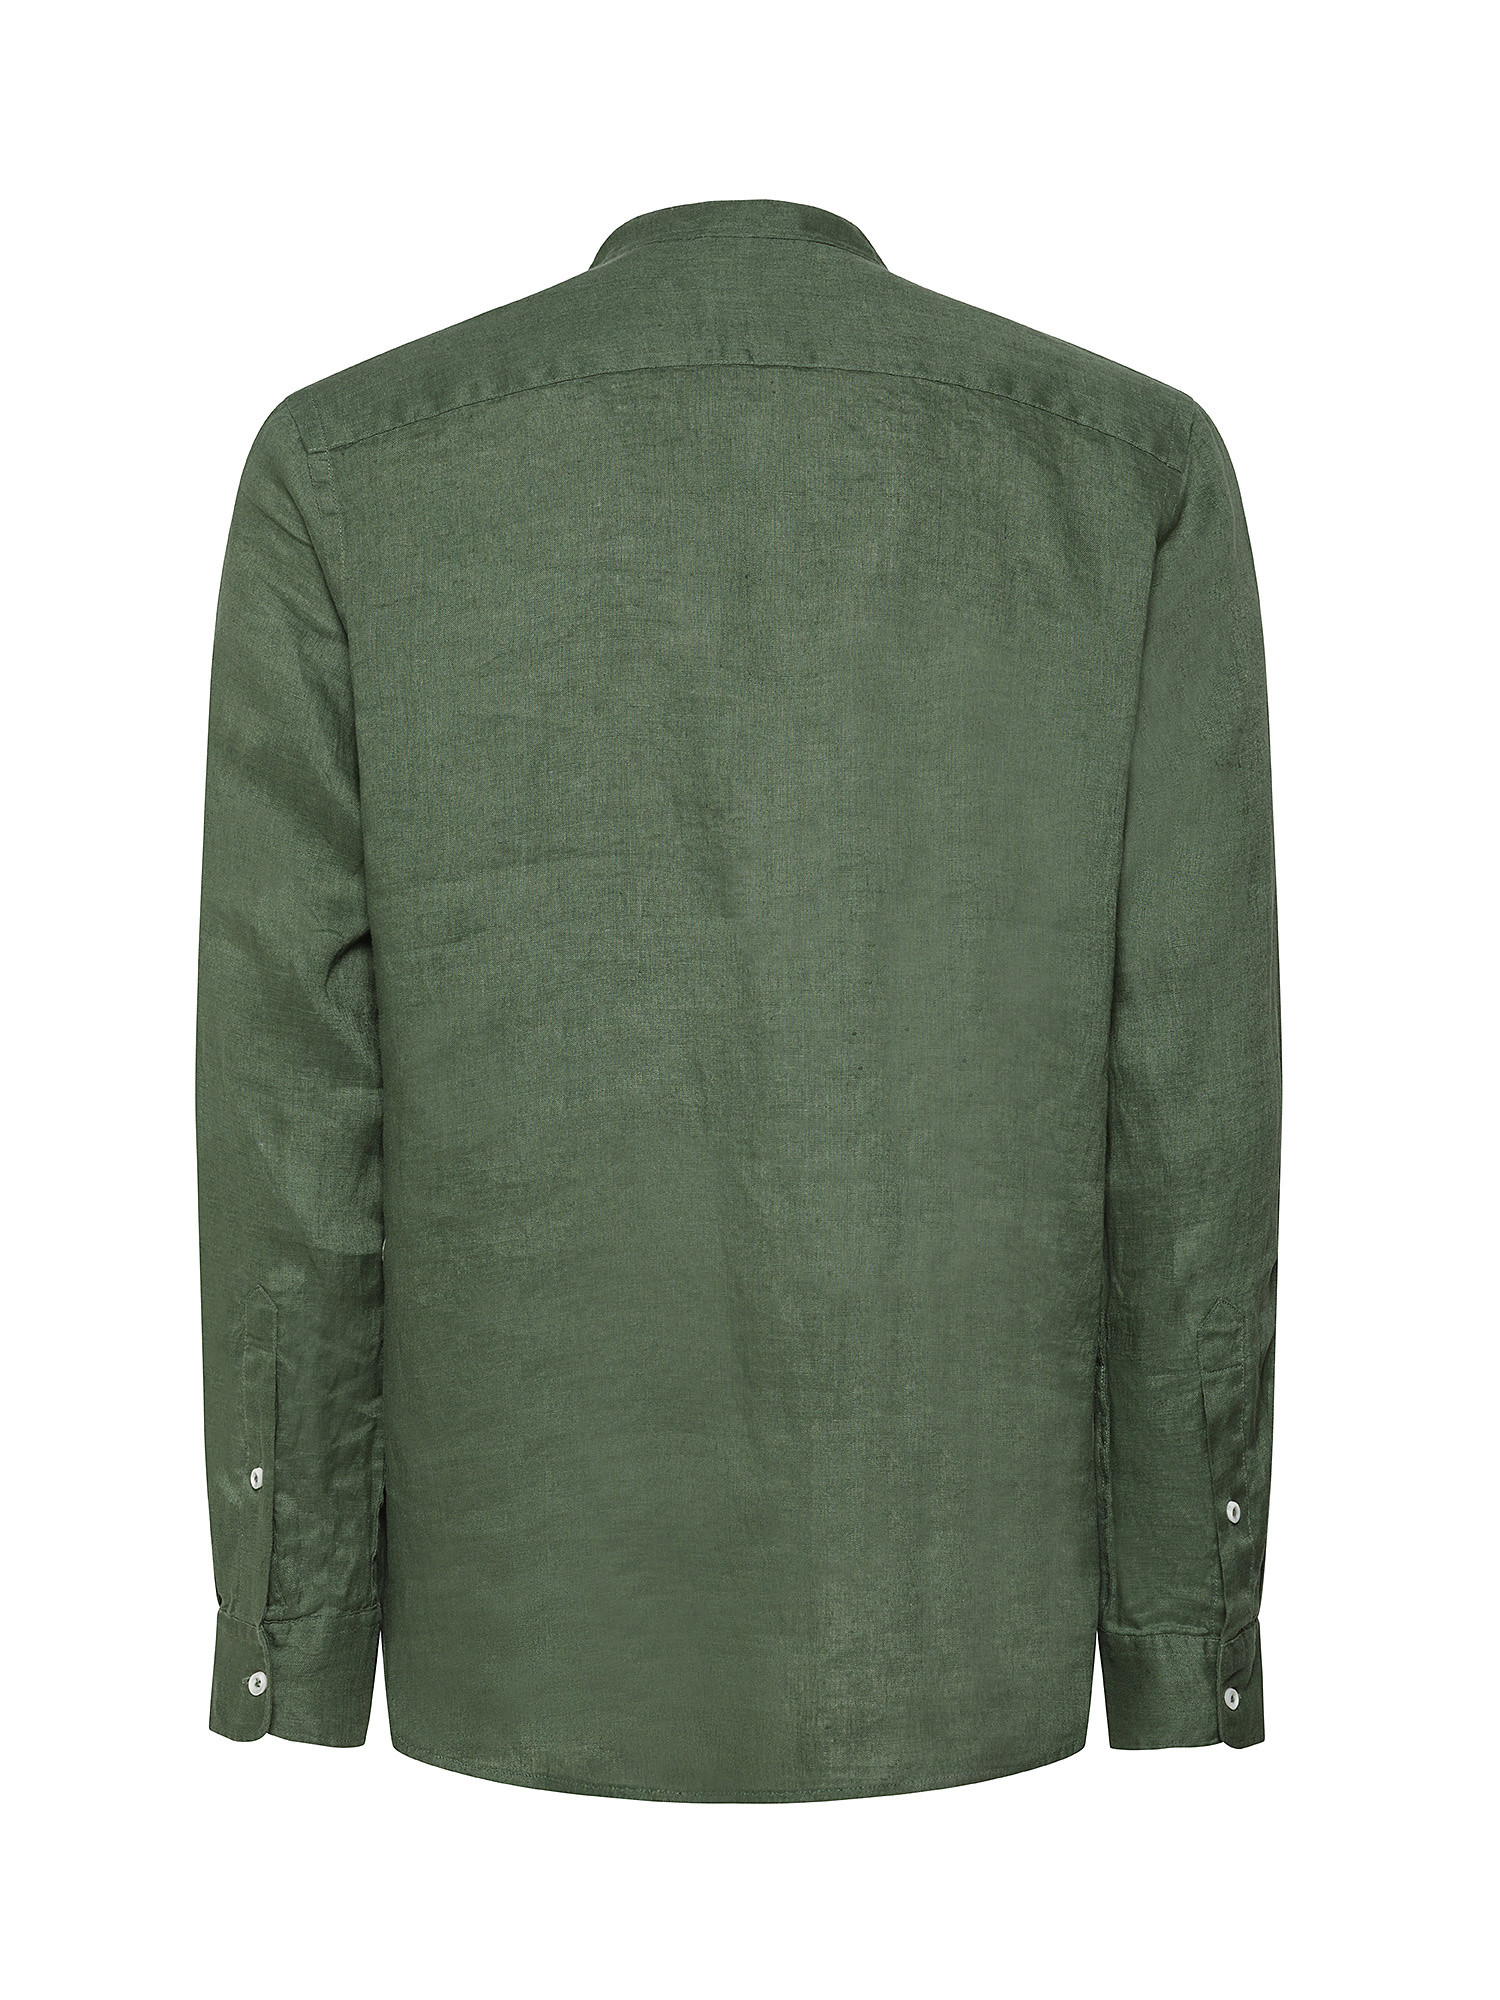 JCT - Camicia coreana in puro lino, Verde scuro, large image number 1